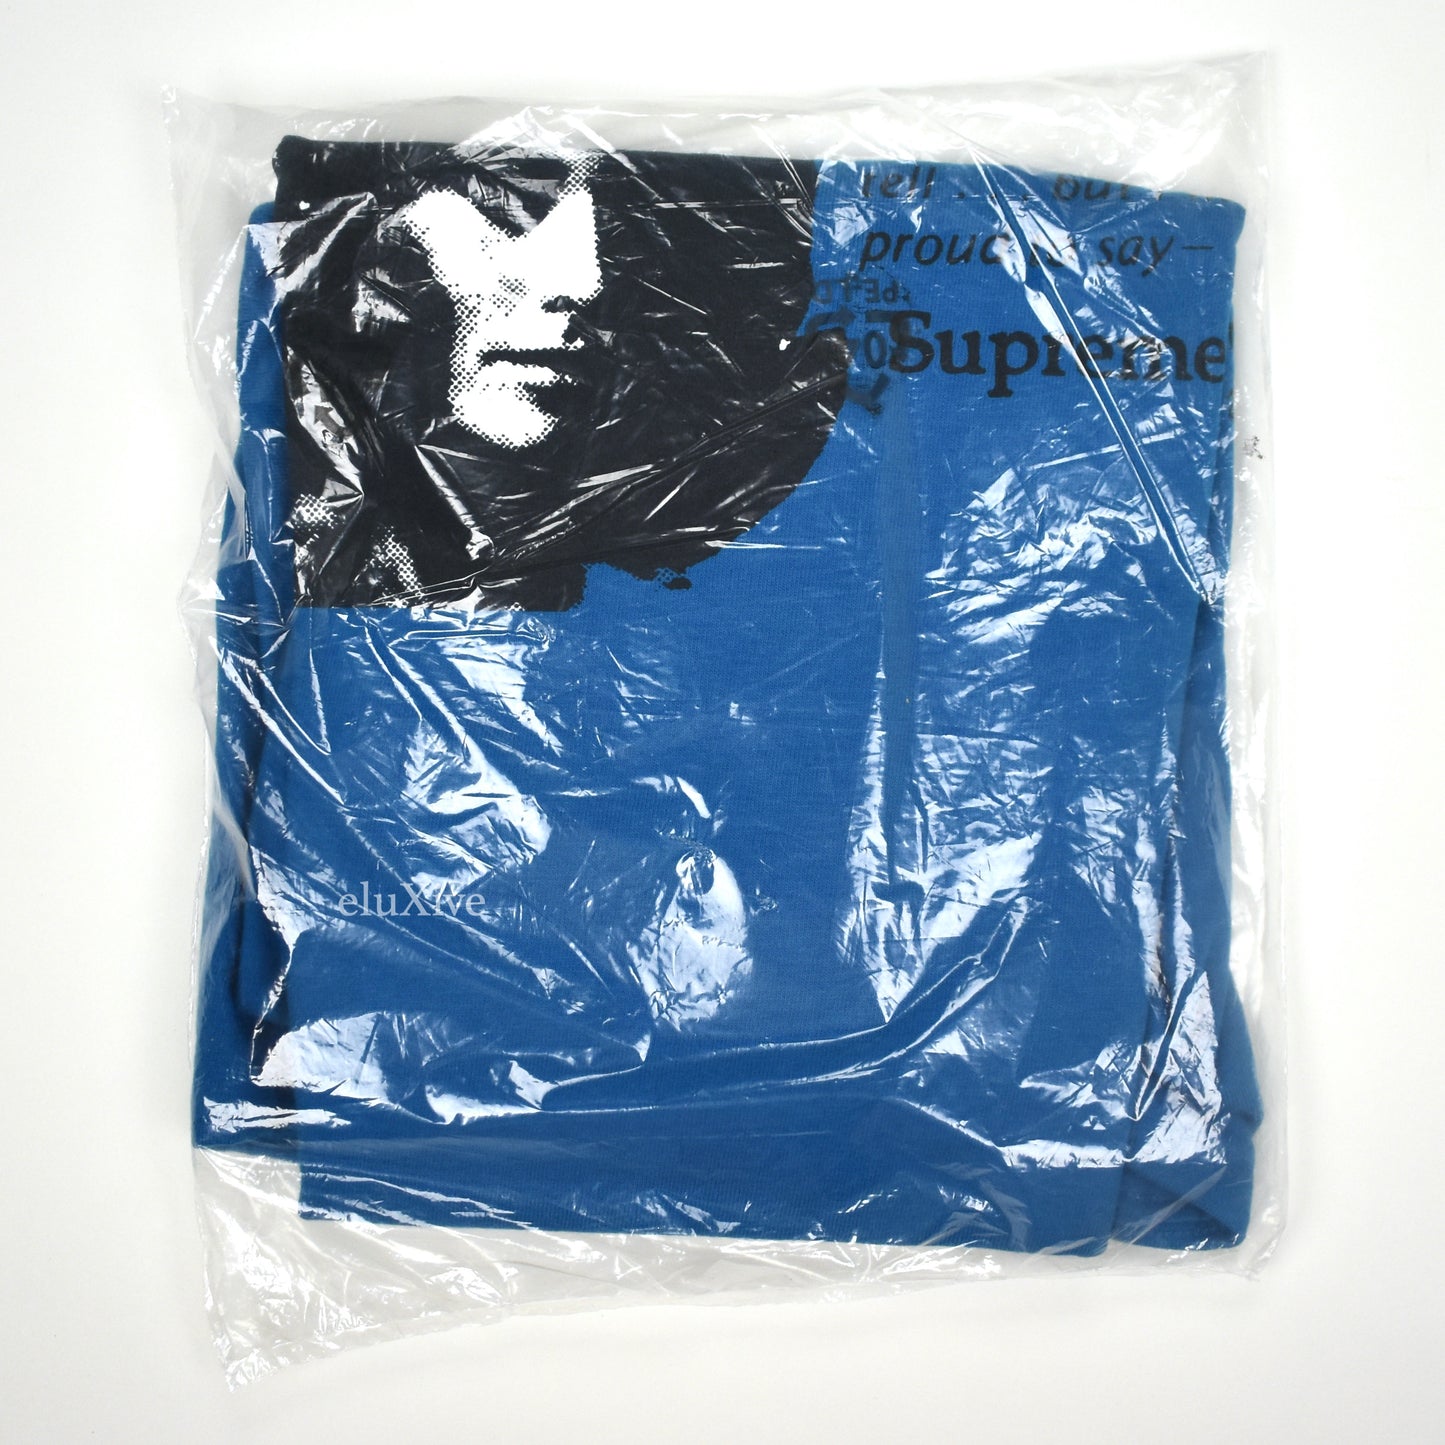 Supreme - Deep Blue Mean Logo T-Shirt (SS17)